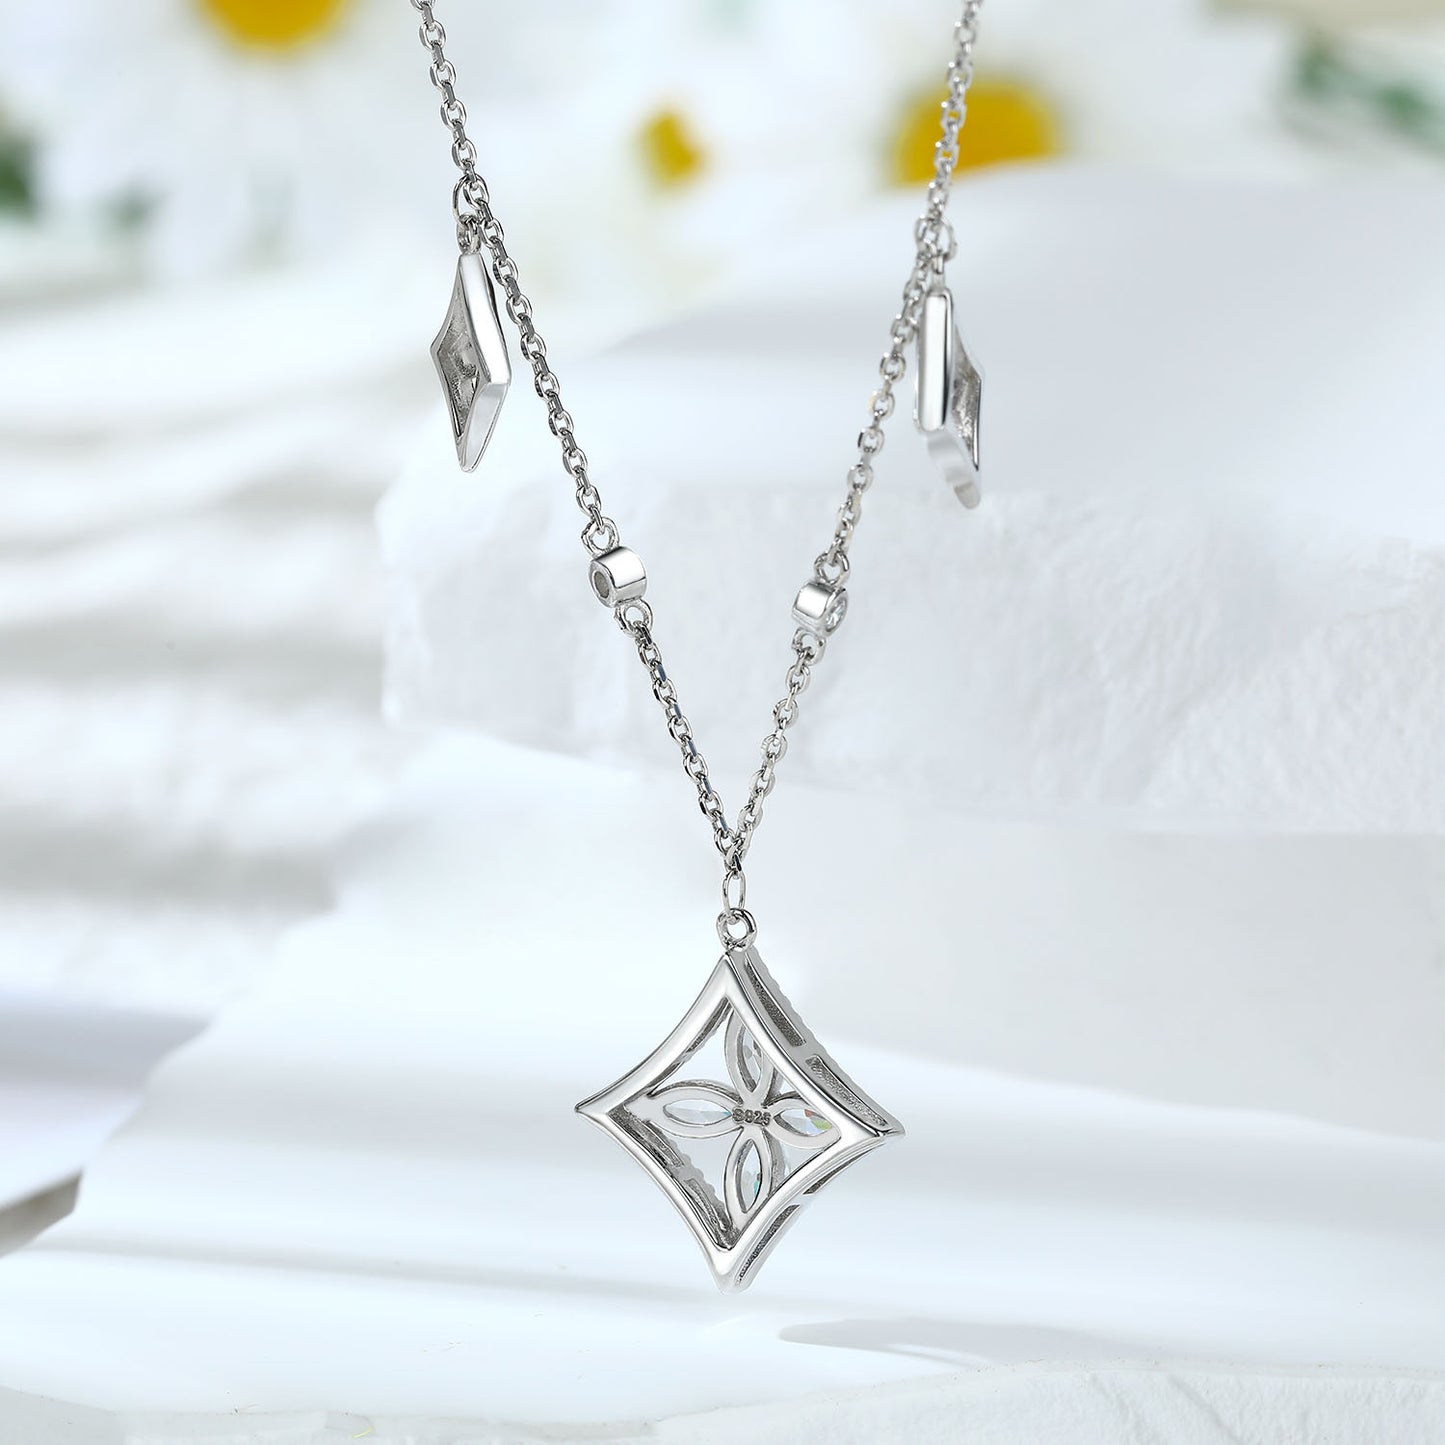 Marquise Zircon Flower Rhombus Pendant Silver Necklace for Women